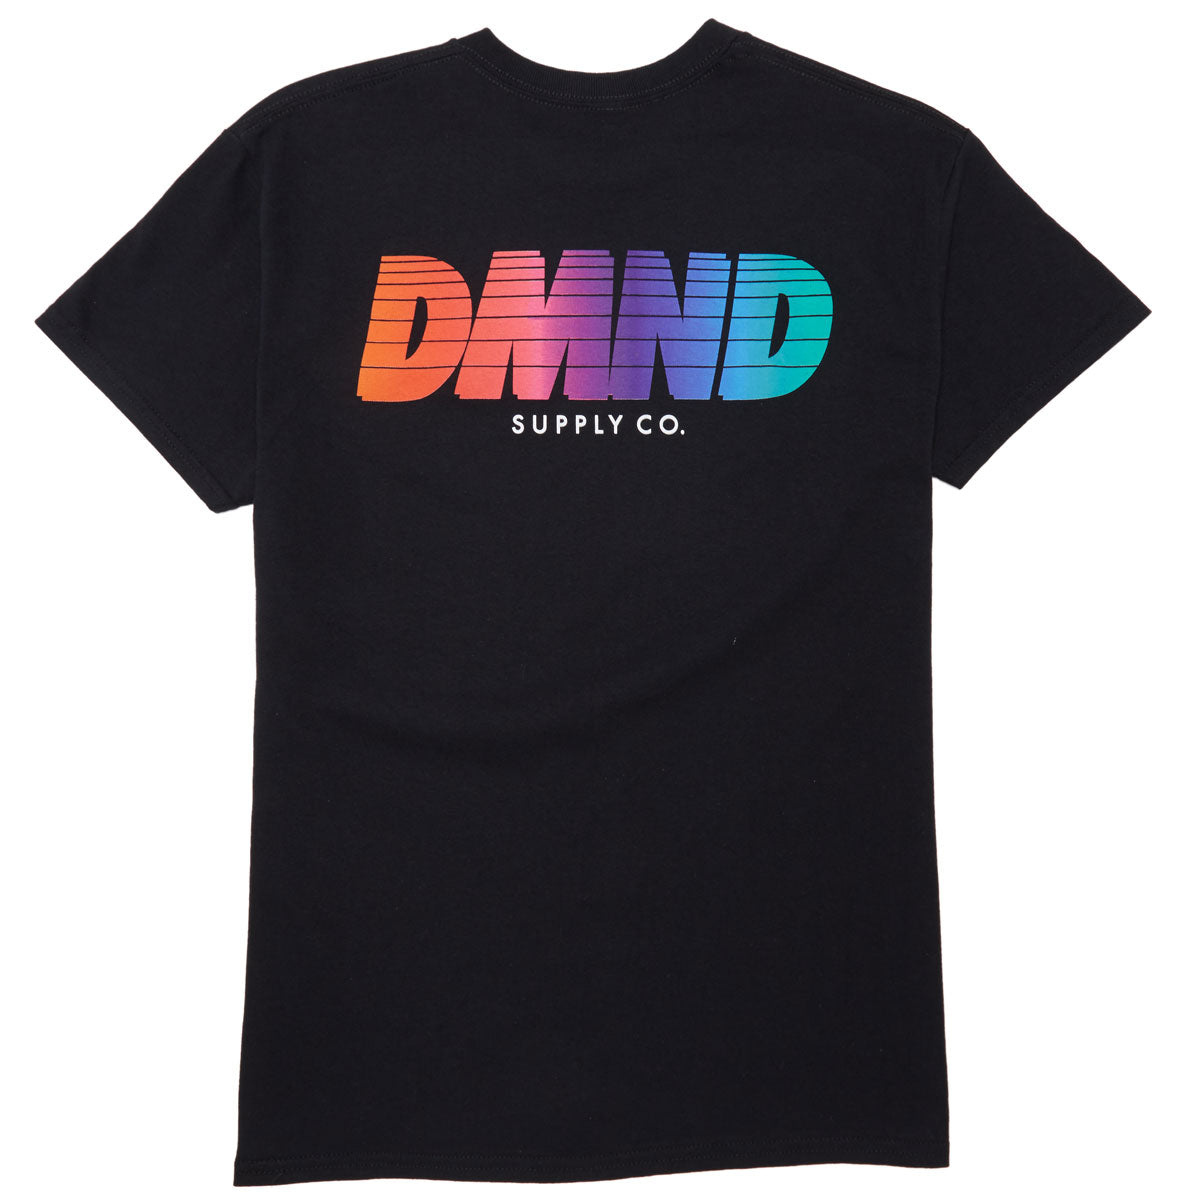 Diamond Supply Co. Racing Team T-Shirt - Black image 1